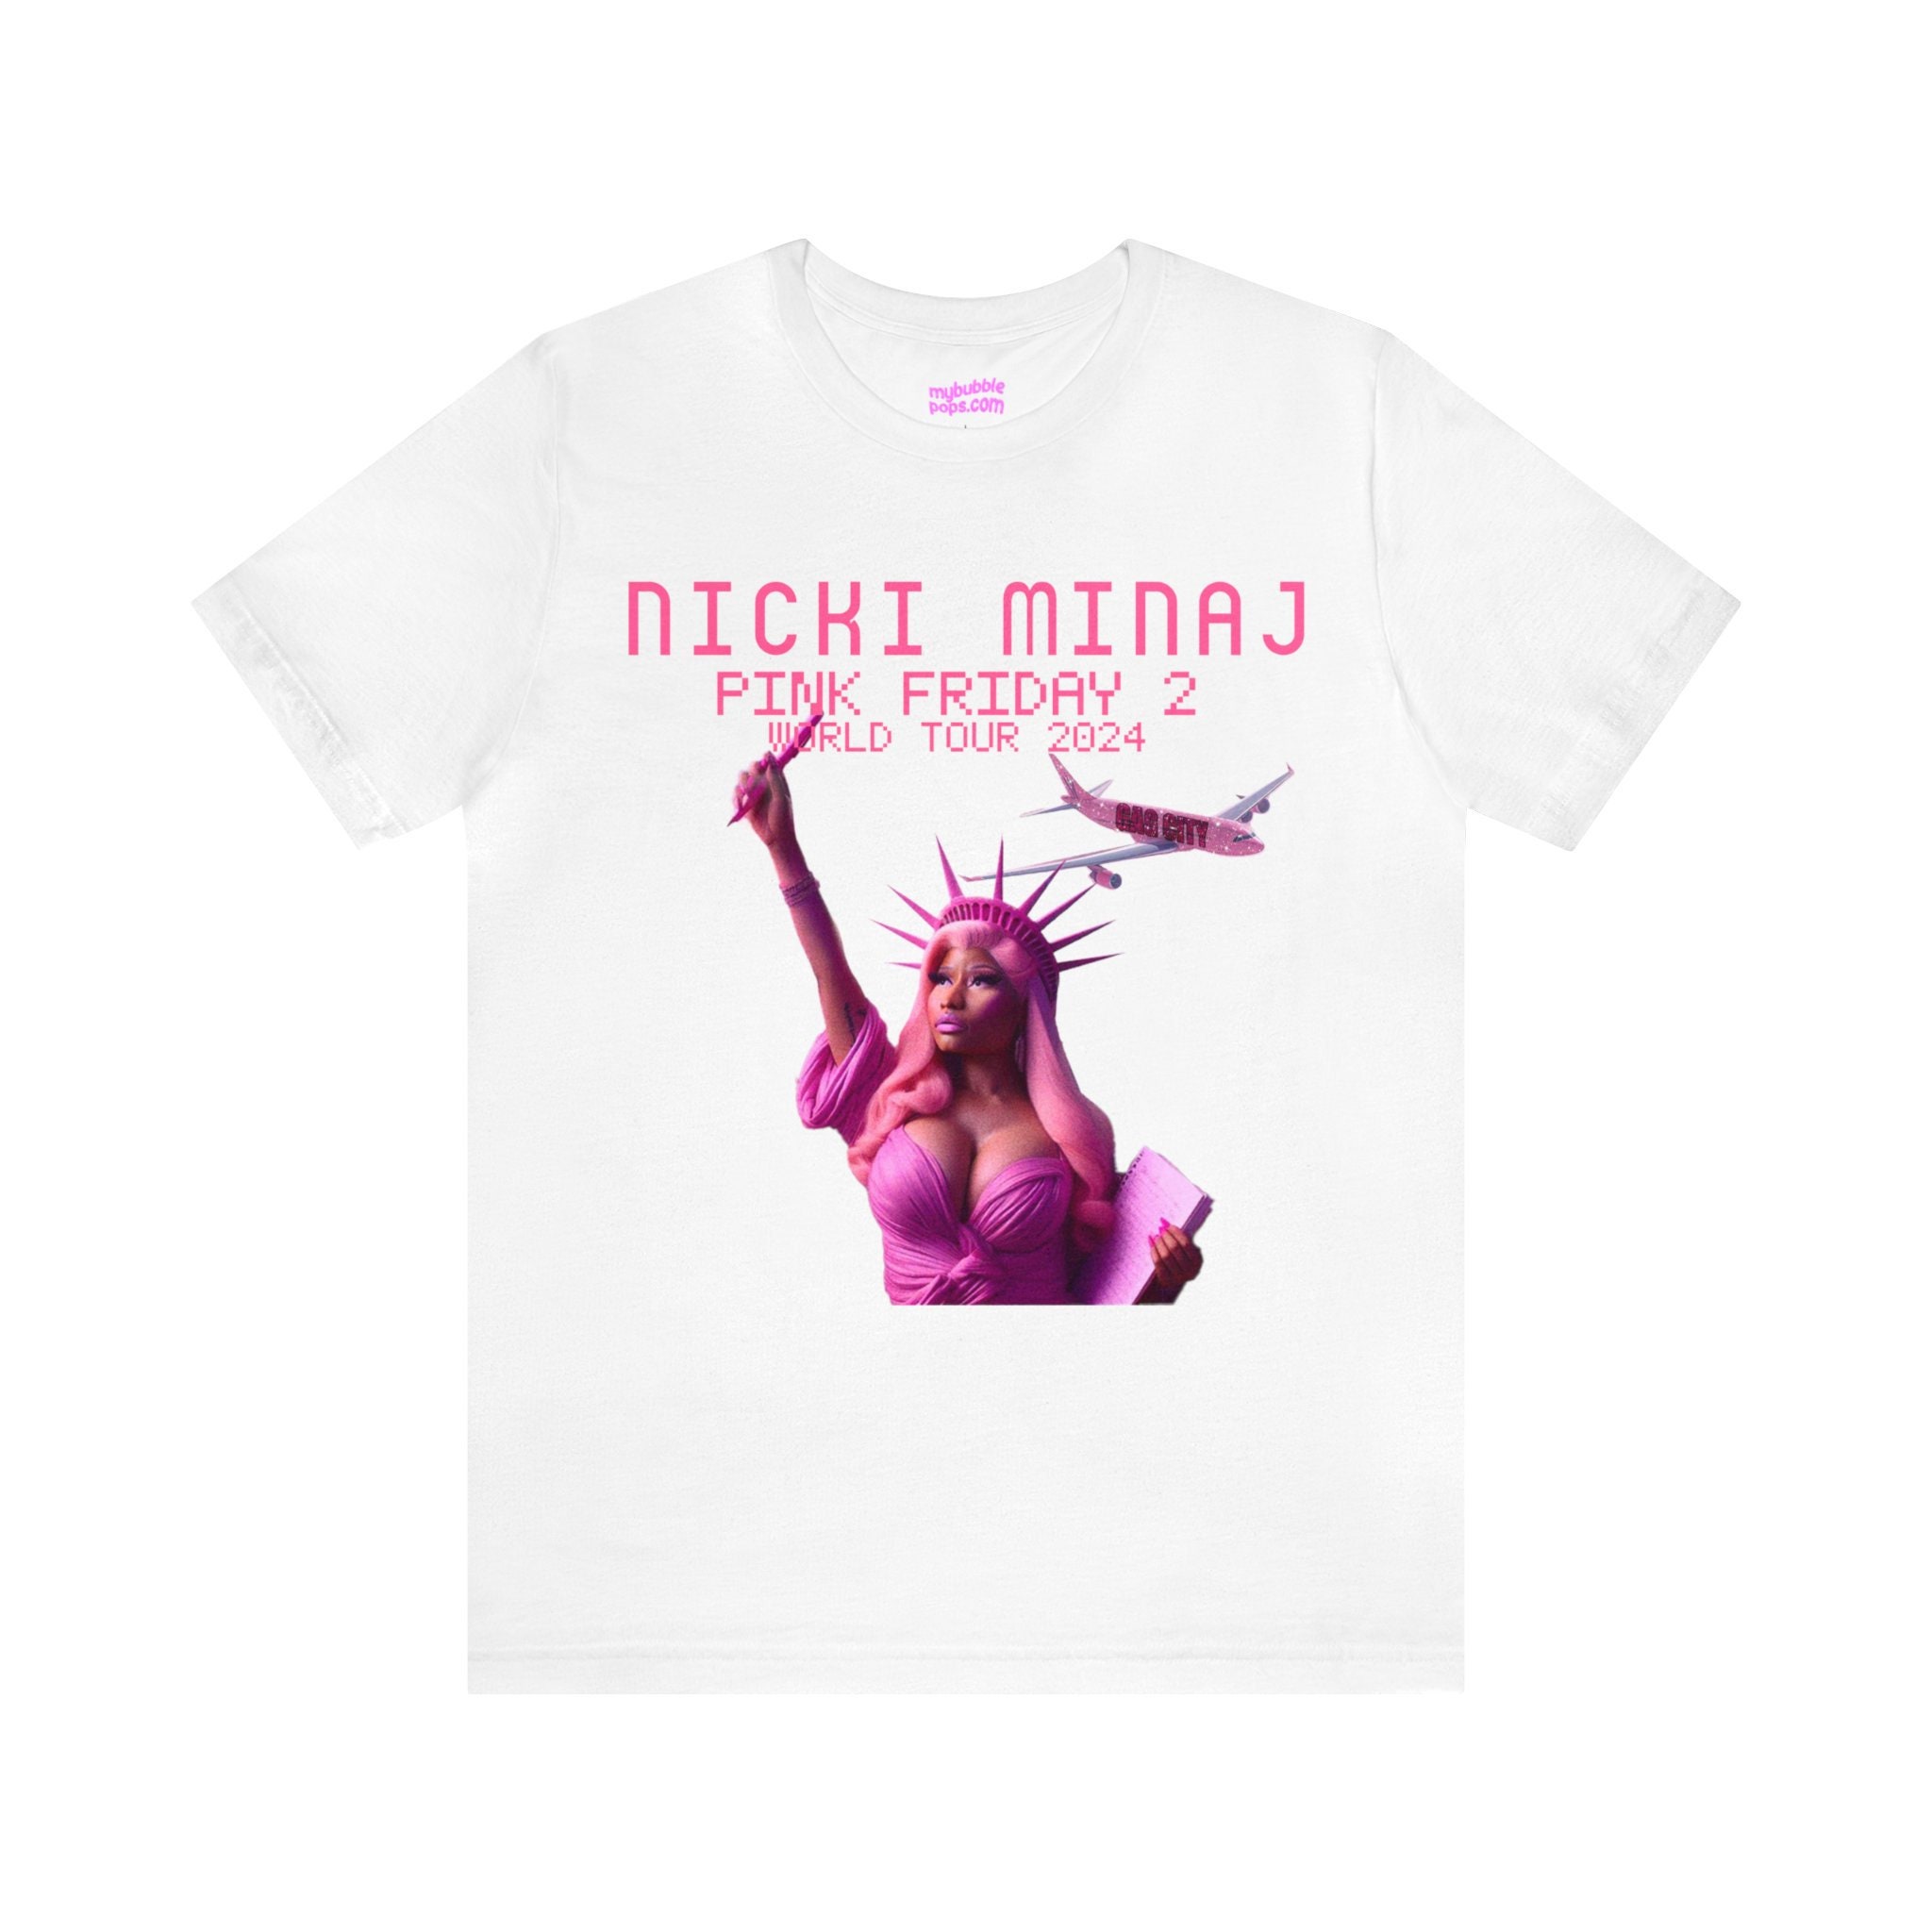 Discover PINK FRIDAY 2 (Nicki Minaj) Gag City 2024 World Tour Shirt